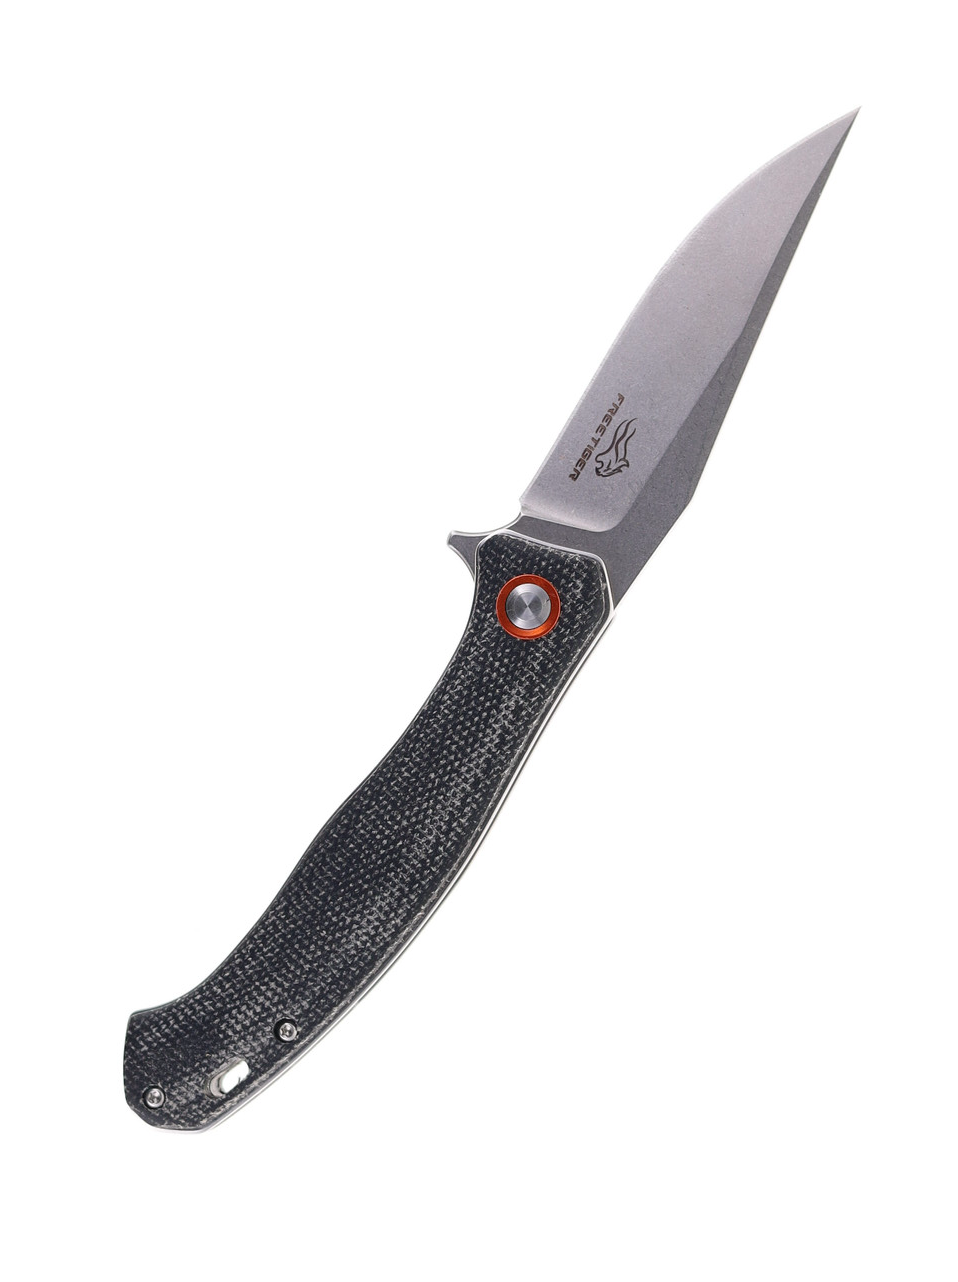 Freetiger FT 958 BK Black Folding Knife product image